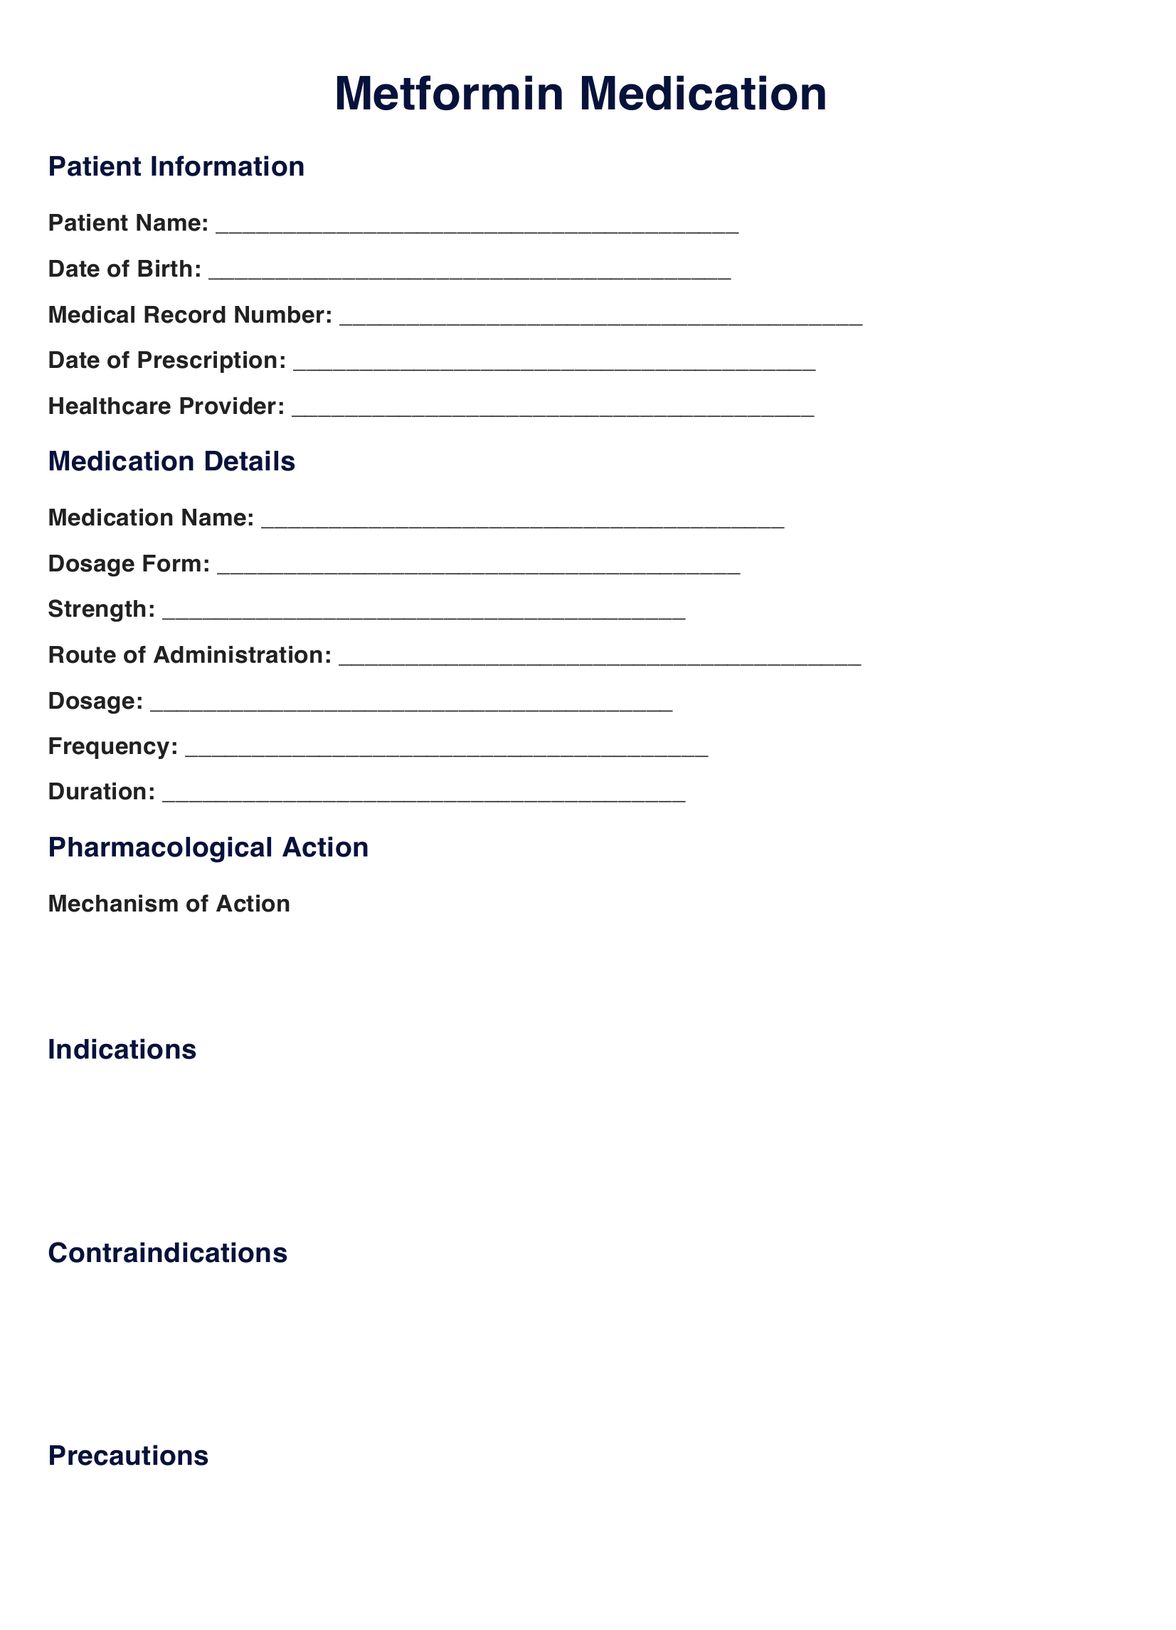 Metformin Medication Template PDF Example